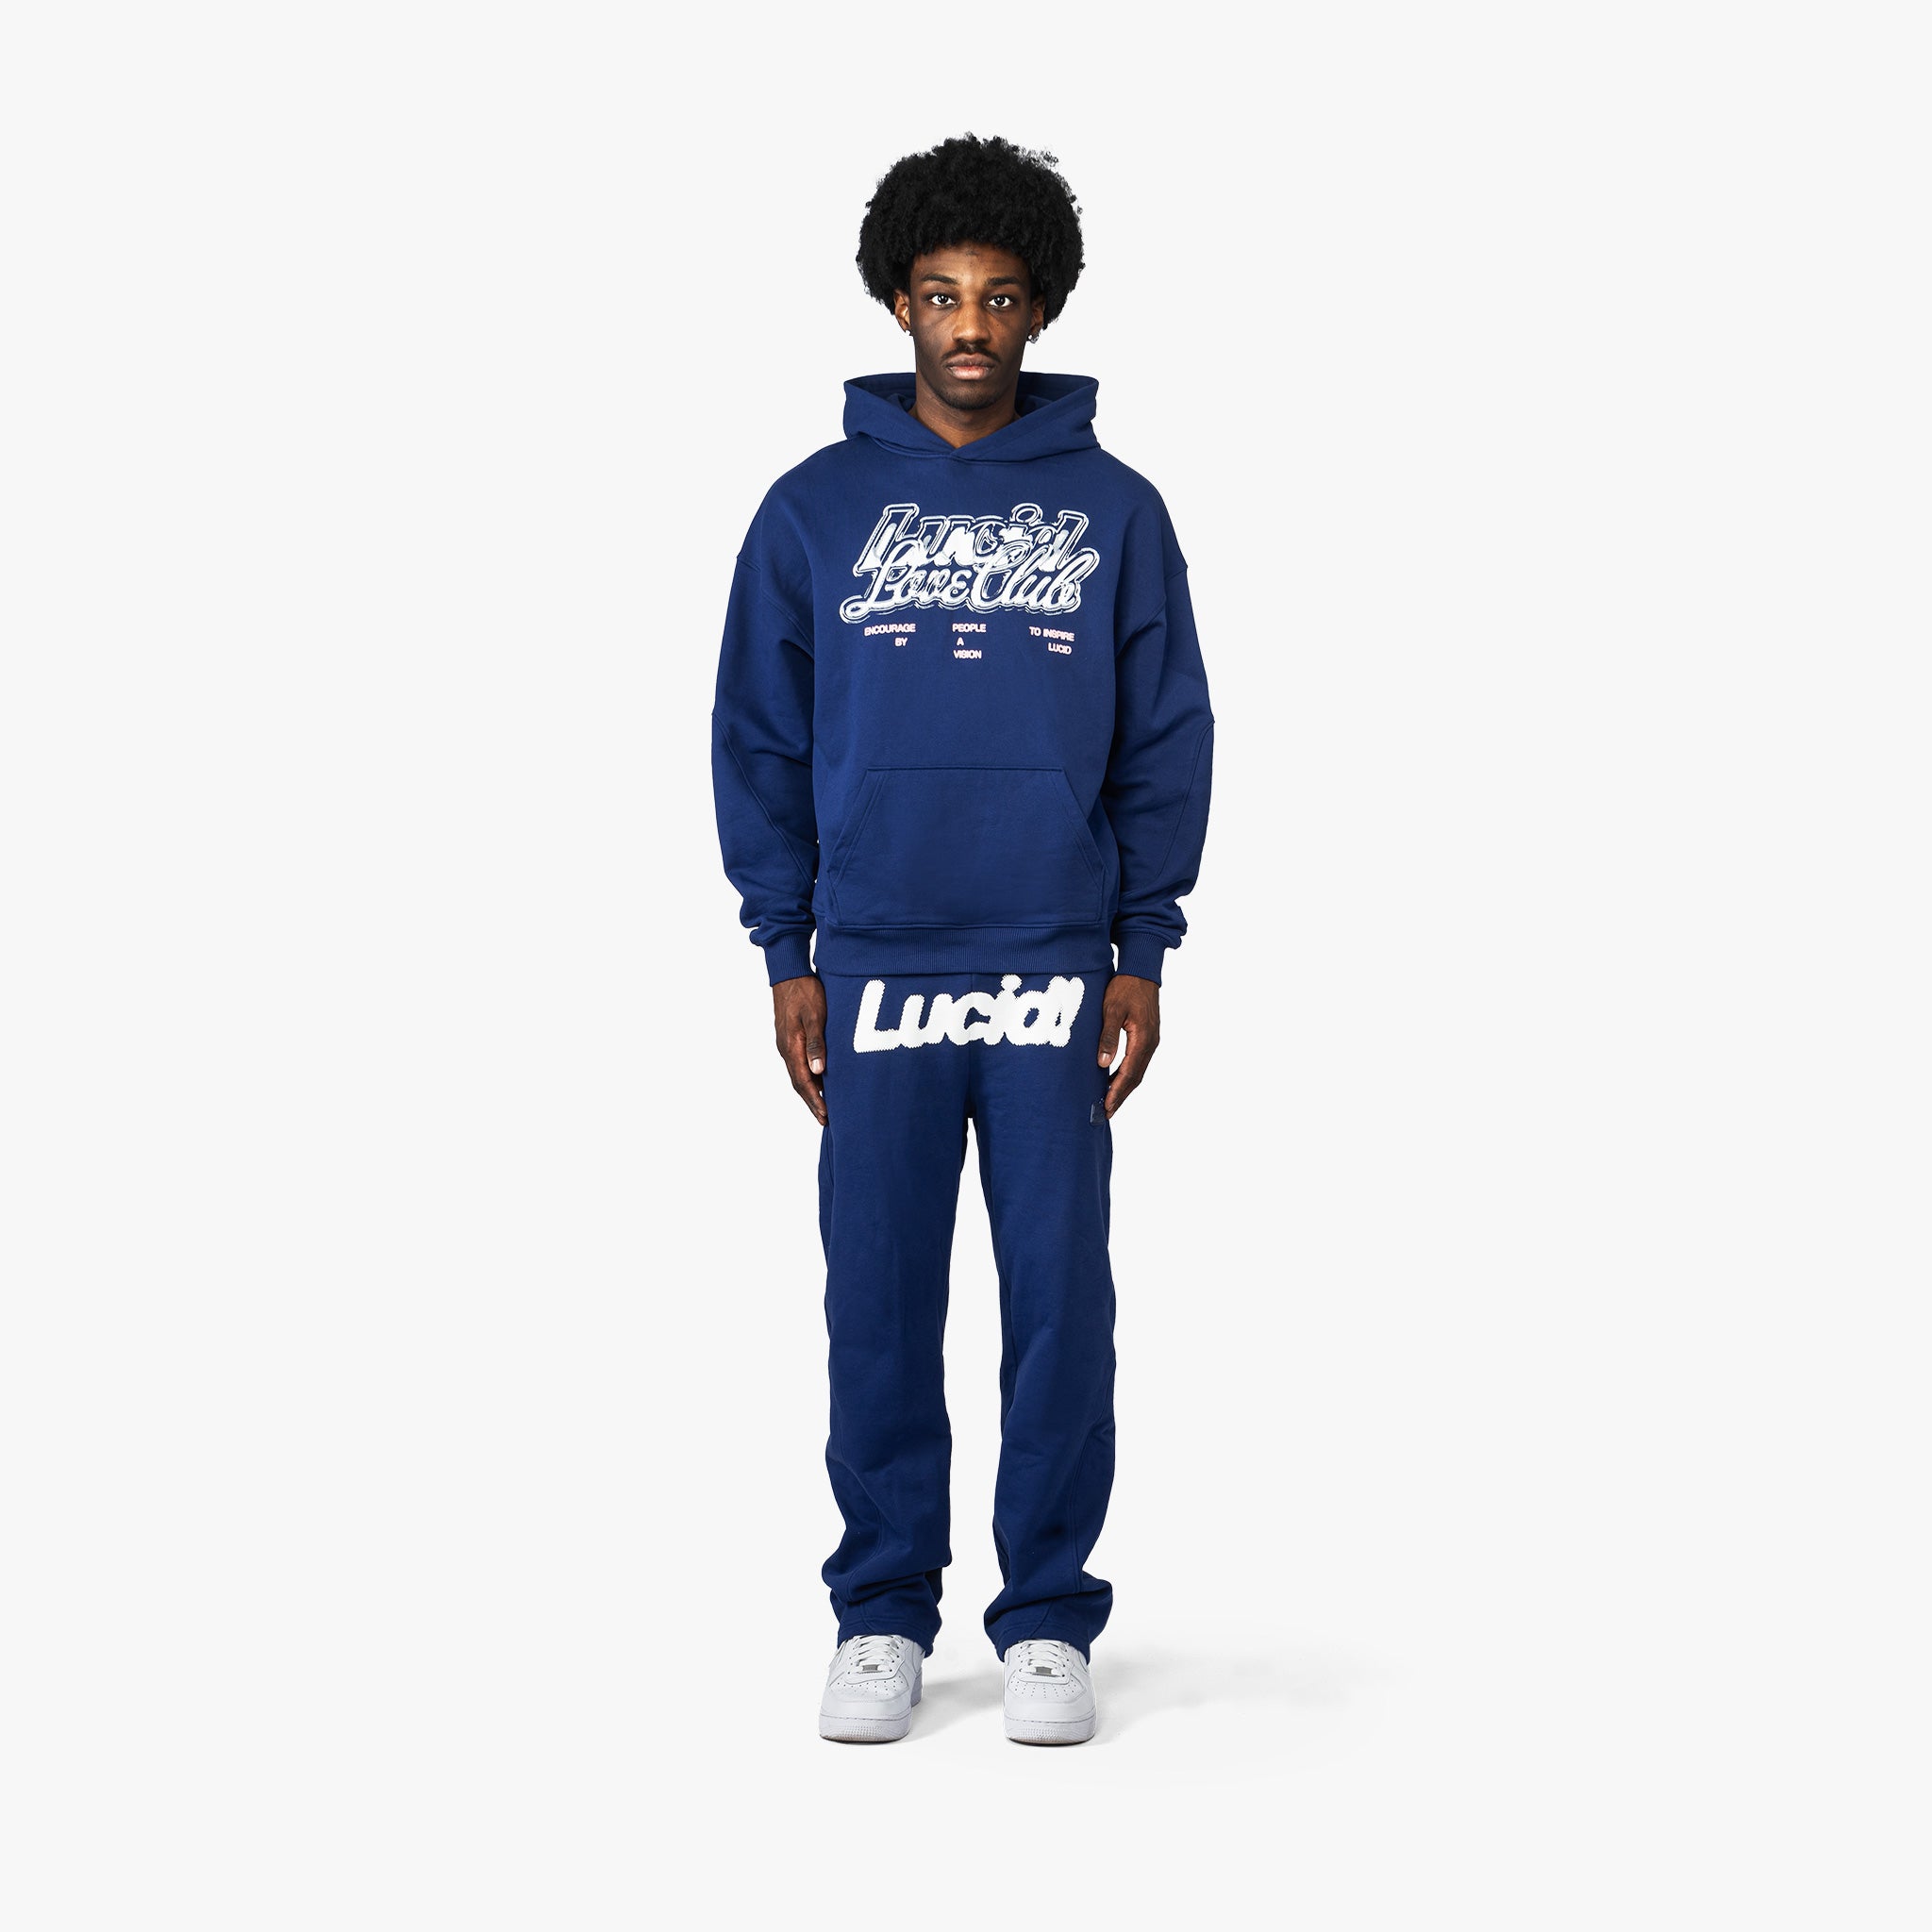 Lucid! Sweatpants Blue/White